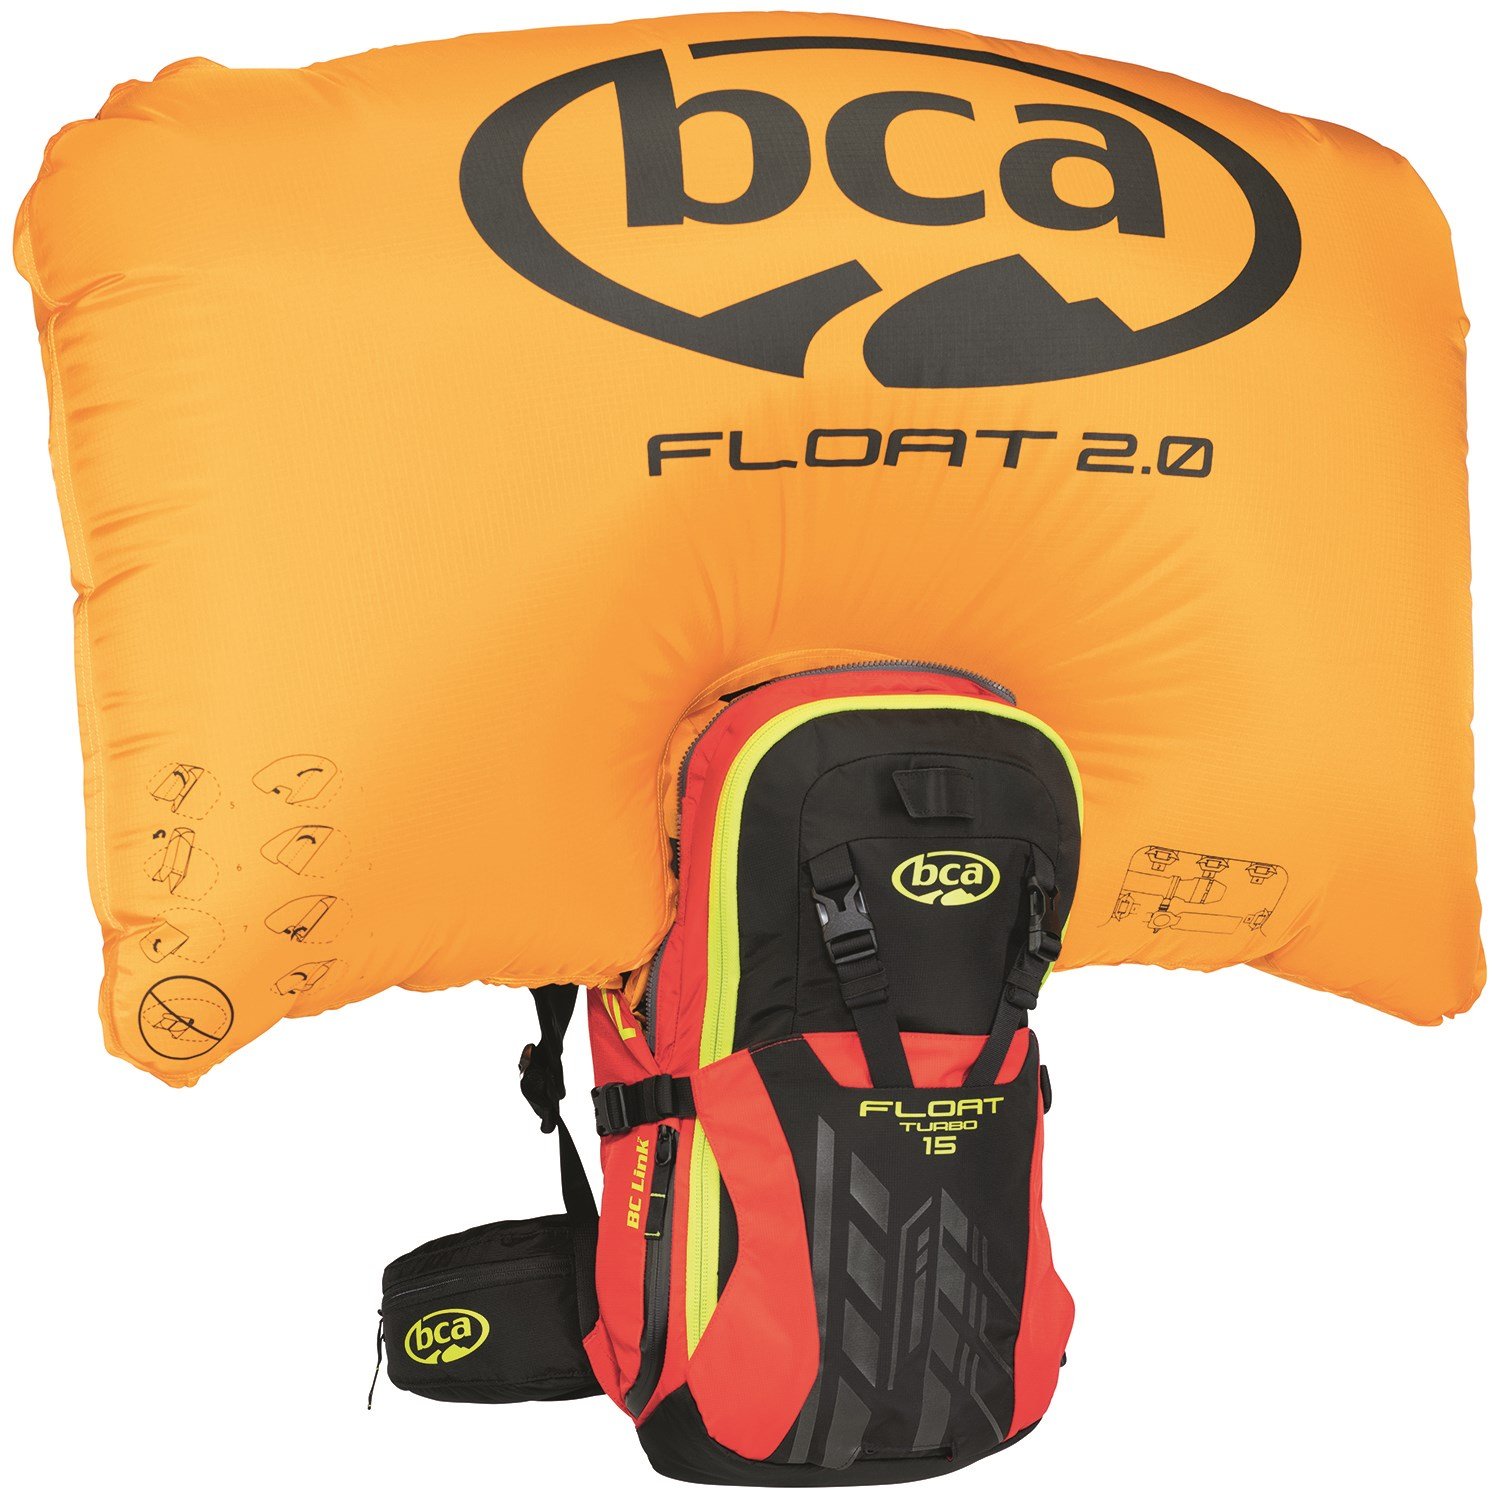 Подушка безопасности BCA Float 15 Turbo, красный подушка м подушка vaude красный